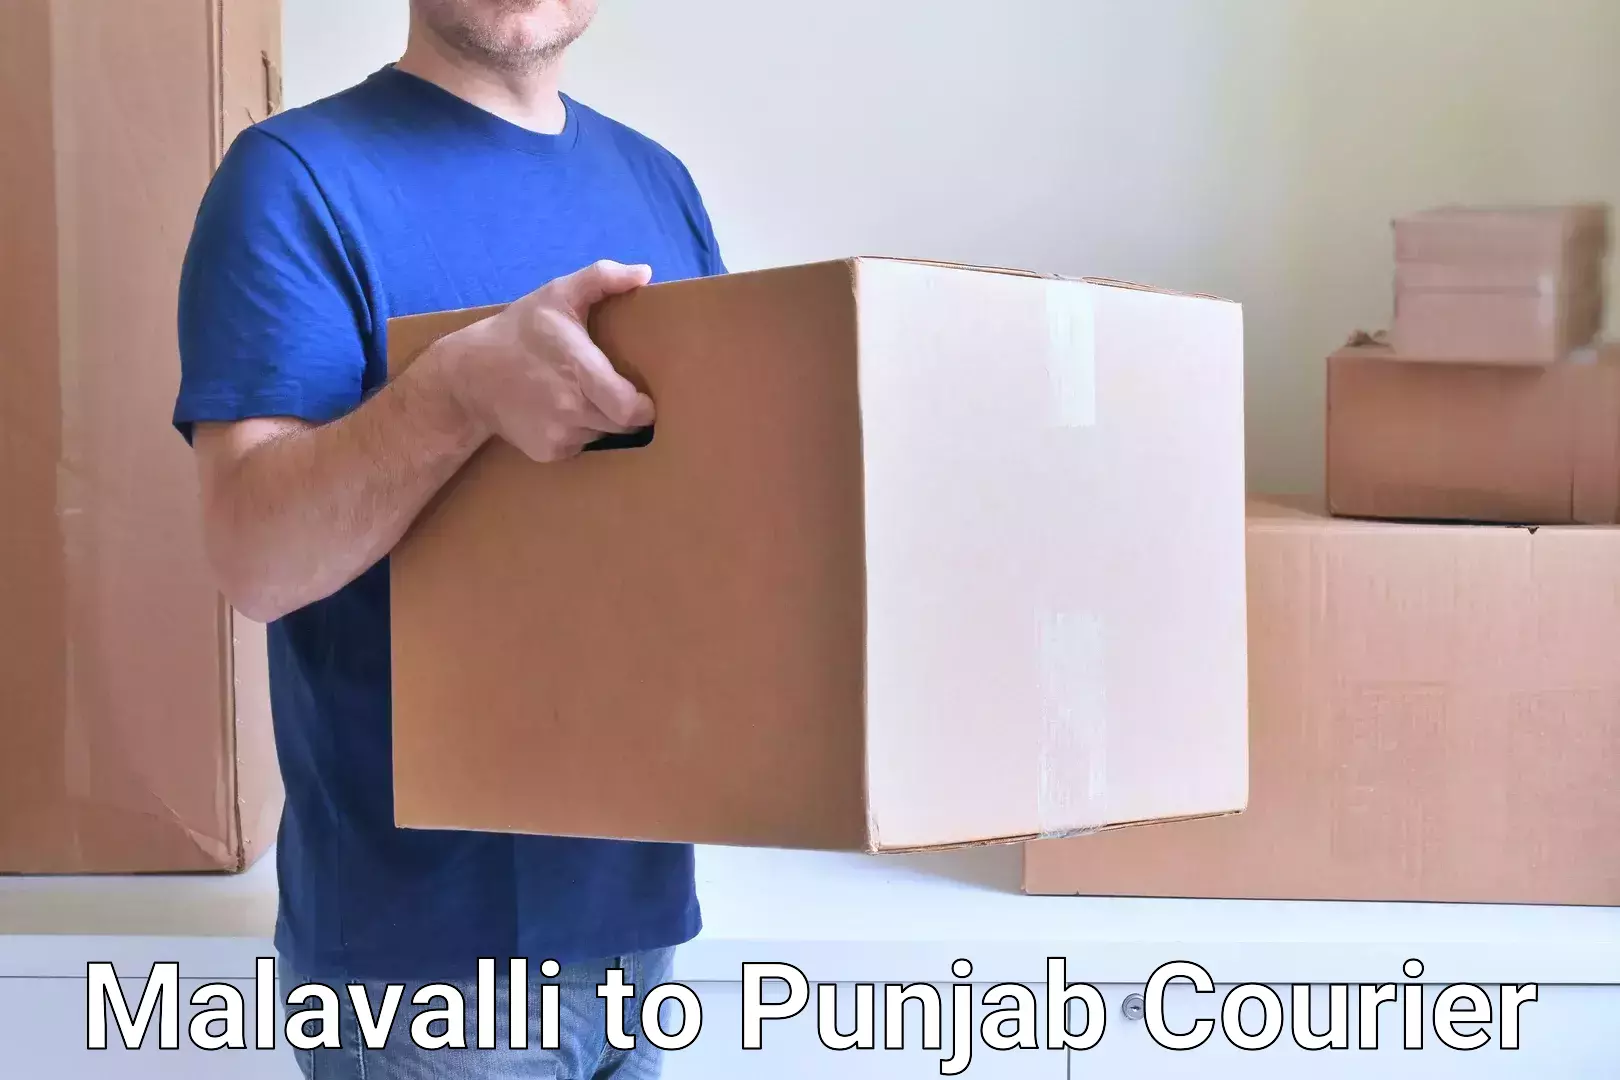 Logistics service provider Malavalli to Punjab